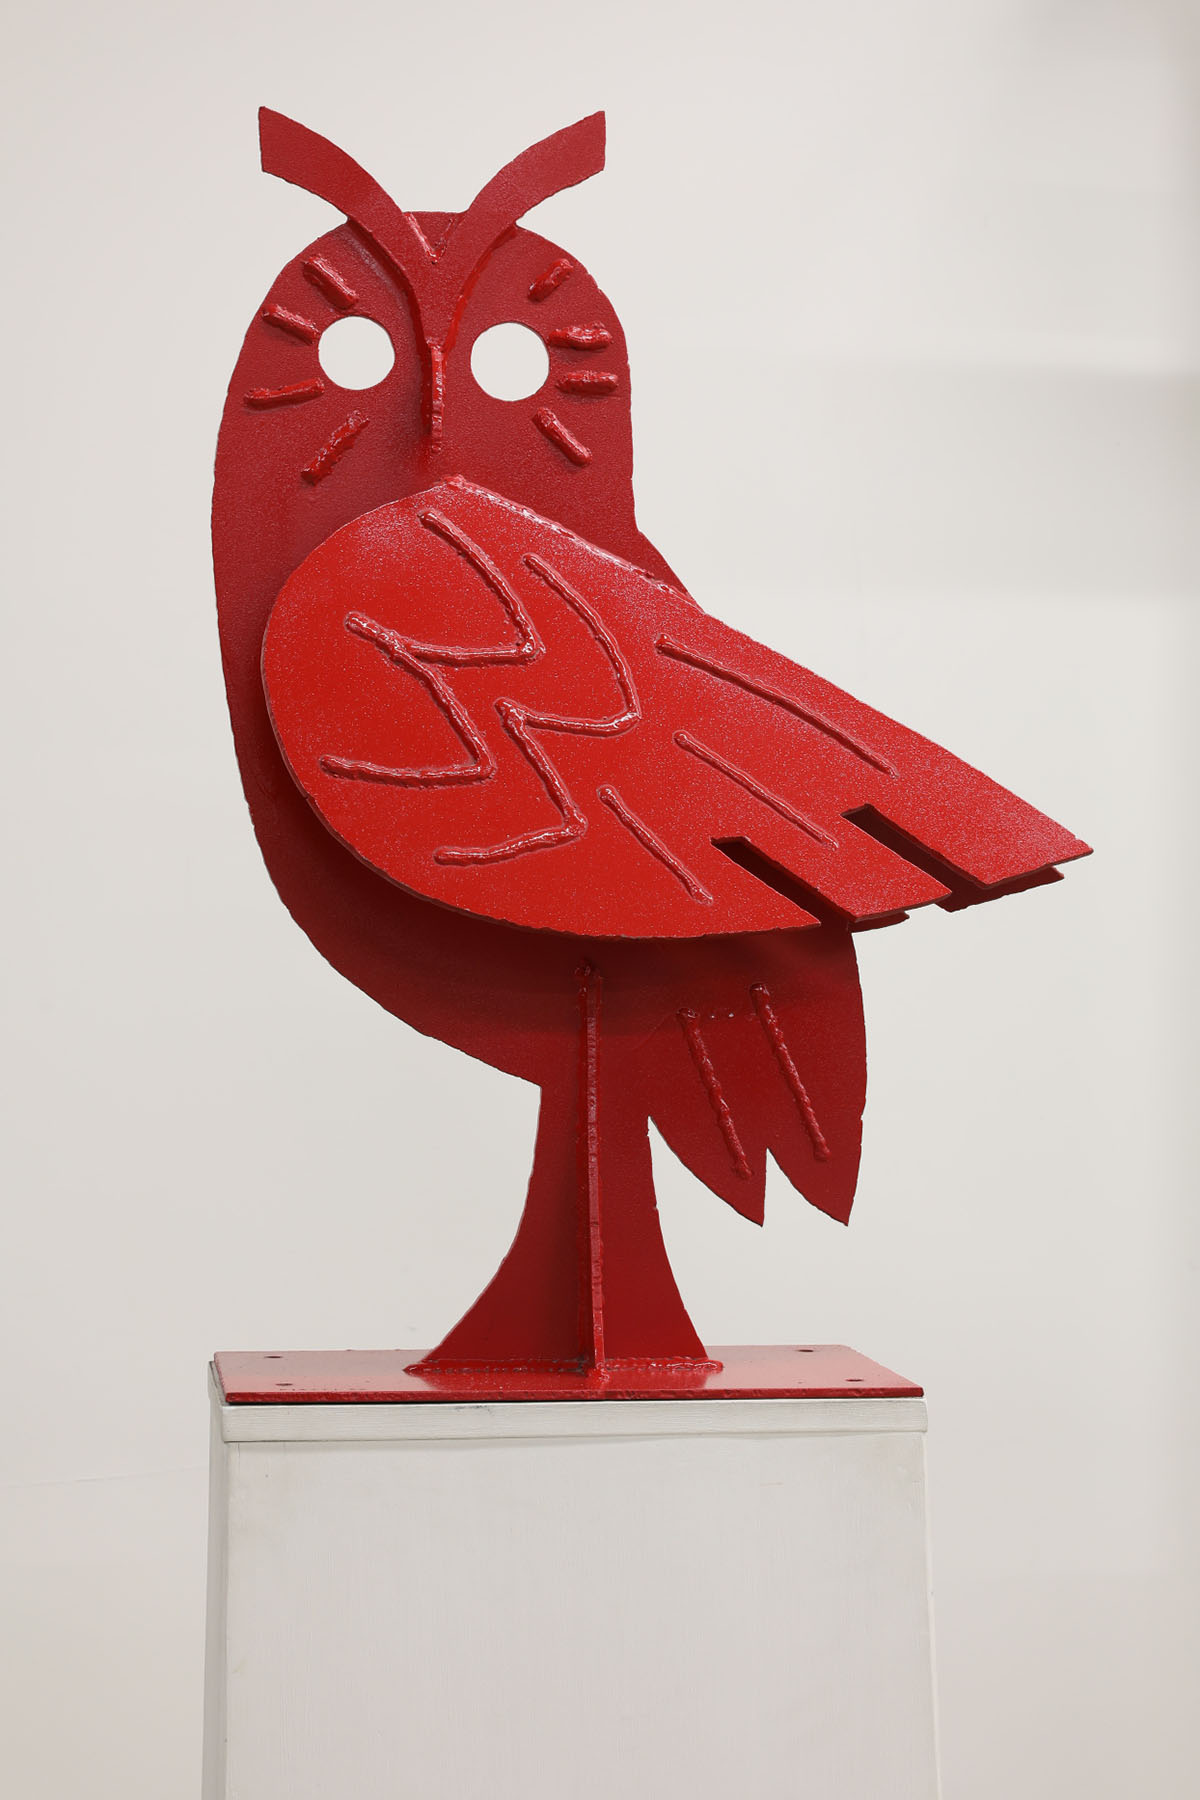 Die bemalte Eisenplastik «Grosse rote Eule» von Celestino Piatti, 1986 (Bild: ZB Zürich / Celestino Piatti / Verein «Celestino Piatti – das visuelle Erbe»)